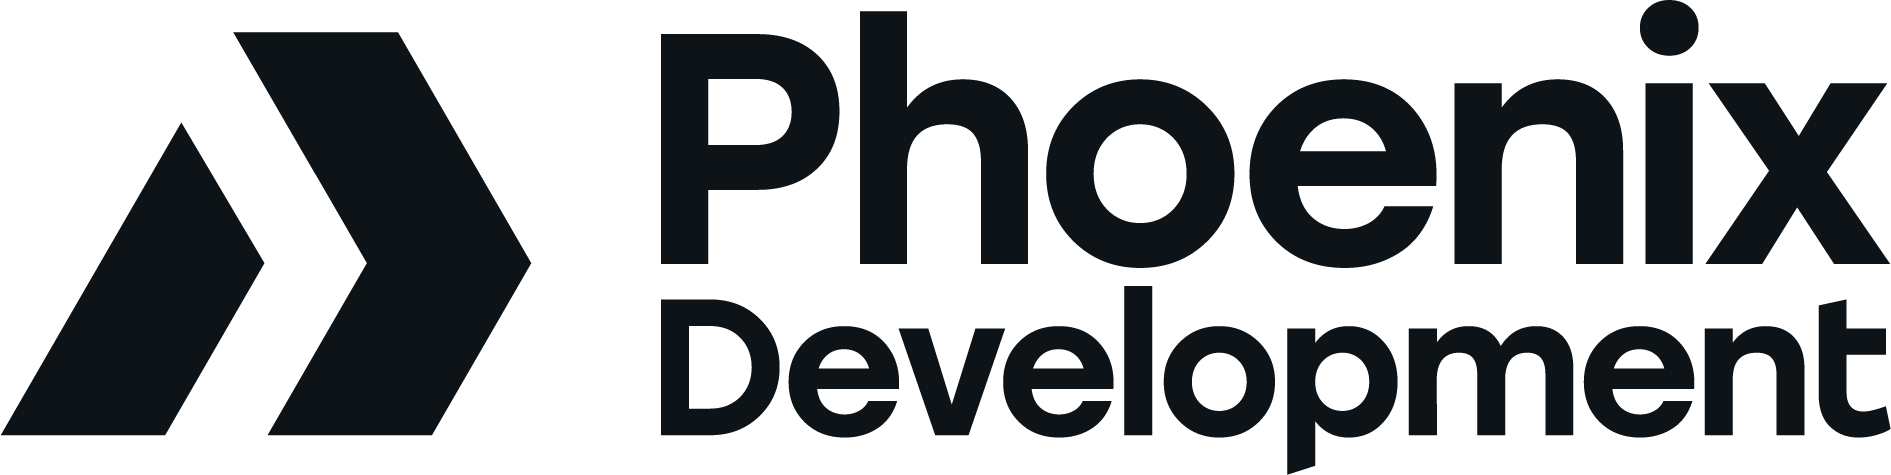 Phoenix Development